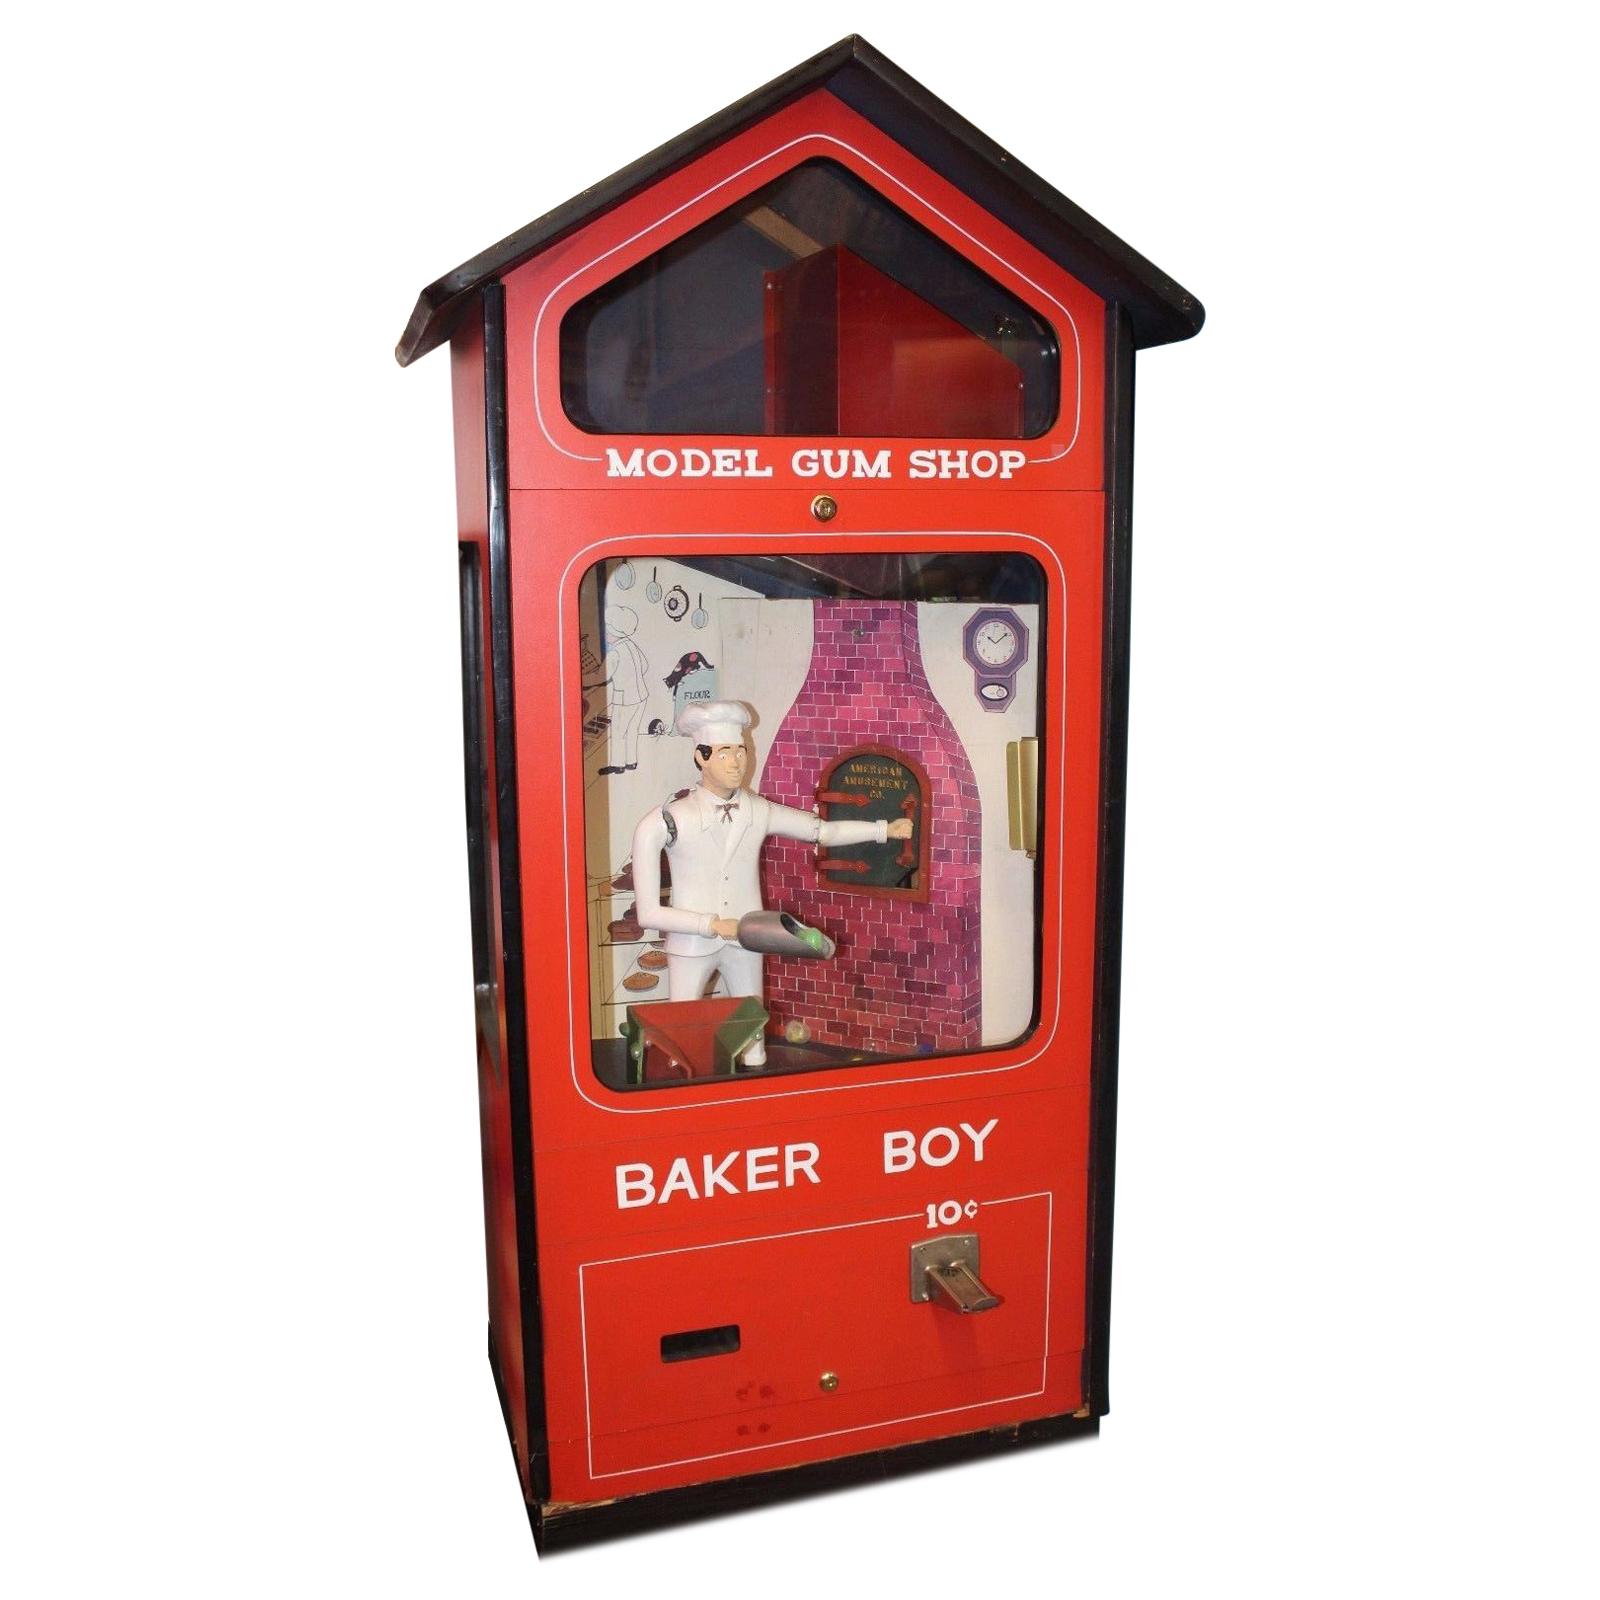 1970s Mechanical Baker Boy Vending 10c Machine For Sale